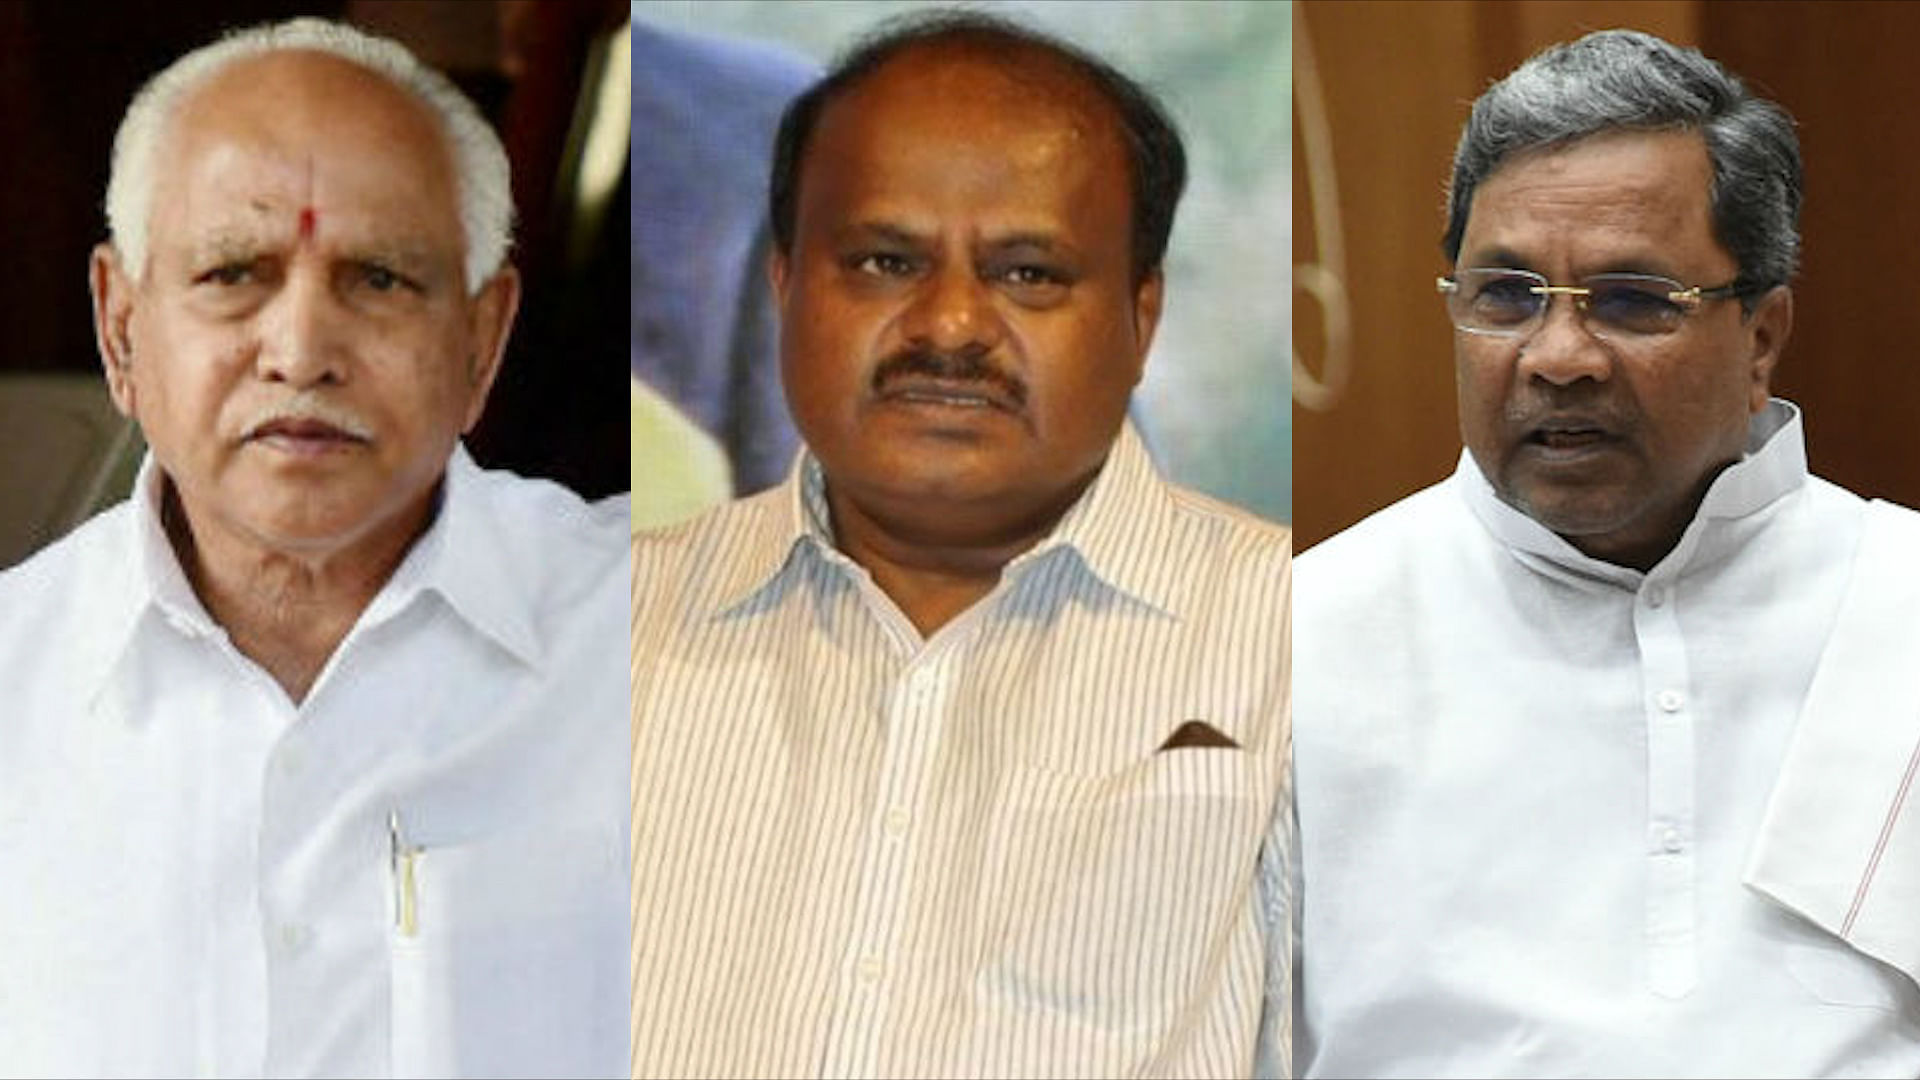 BJP’s Yeddyurappa swears in as Karnataka Chief Minister, prompting Congress-JD(S) to call them ‘anti-democracy’.